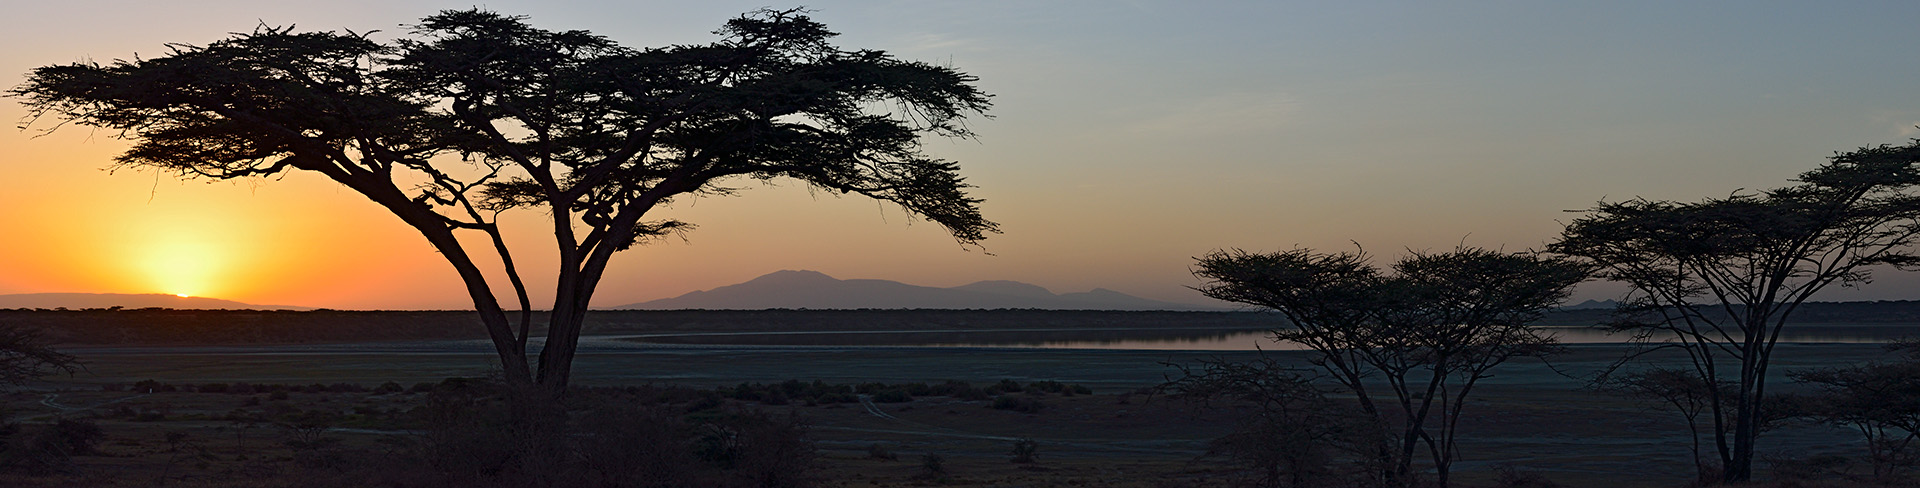 Landschap met parasol acacia in voorgrond, zonsopkomst, het Ndutu meer en Ngorongoro gebergte in achtergrond.